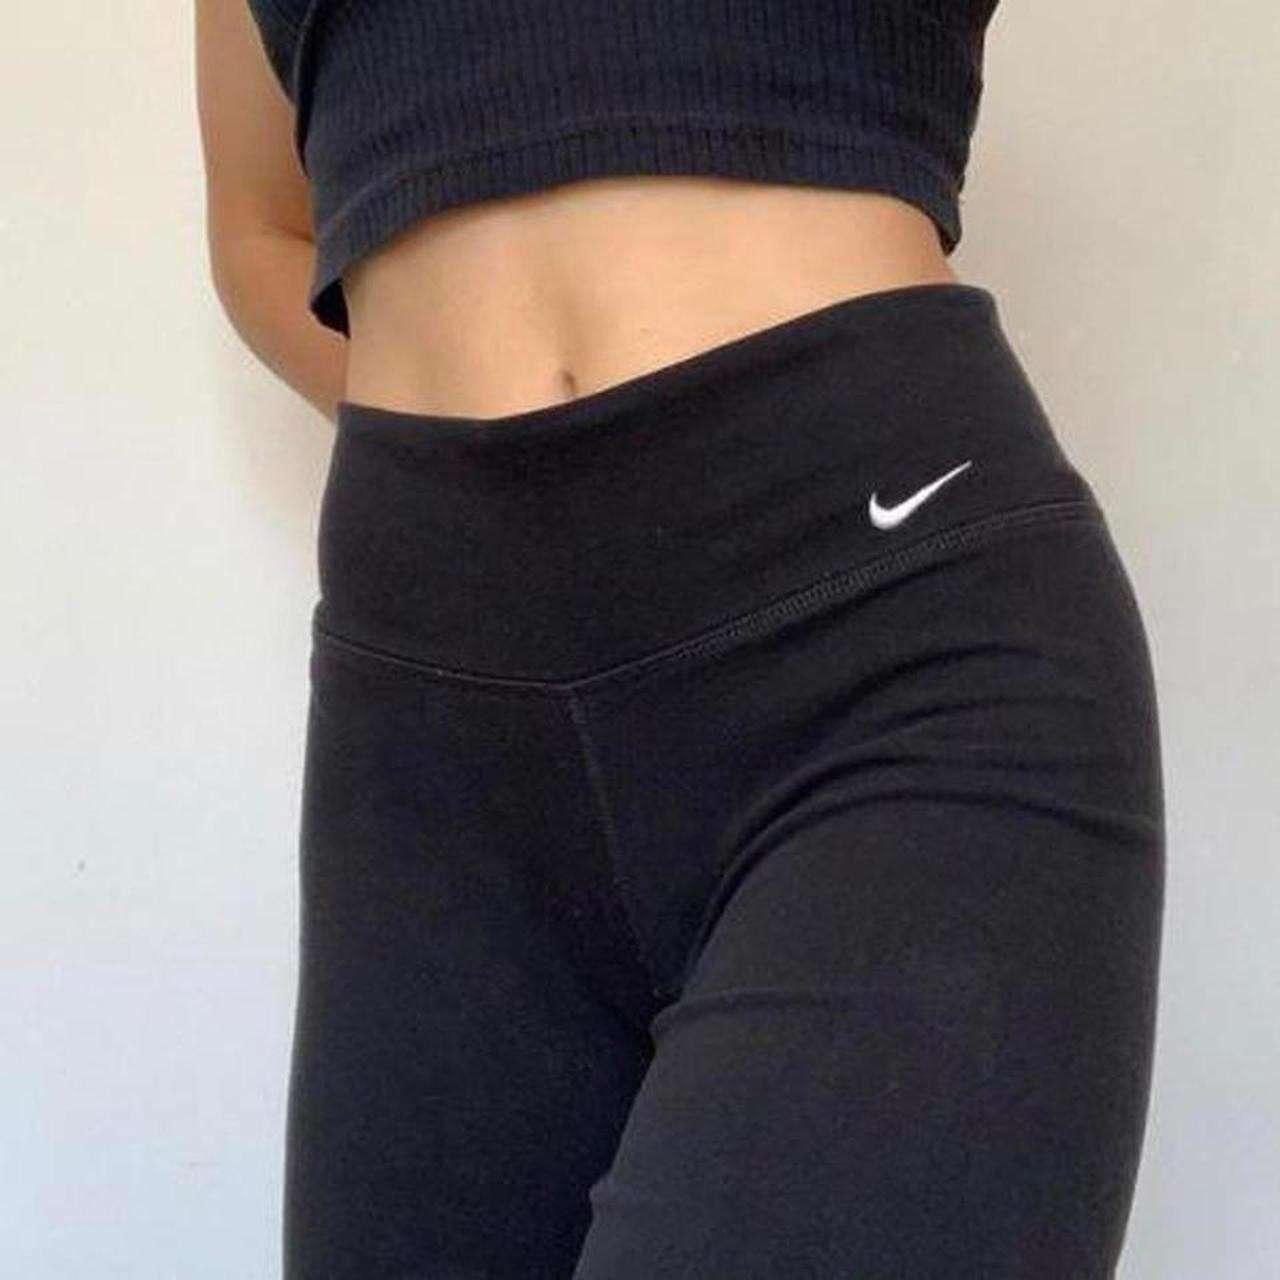 Nike flare yoga pants size large. Worn a few times - Depop